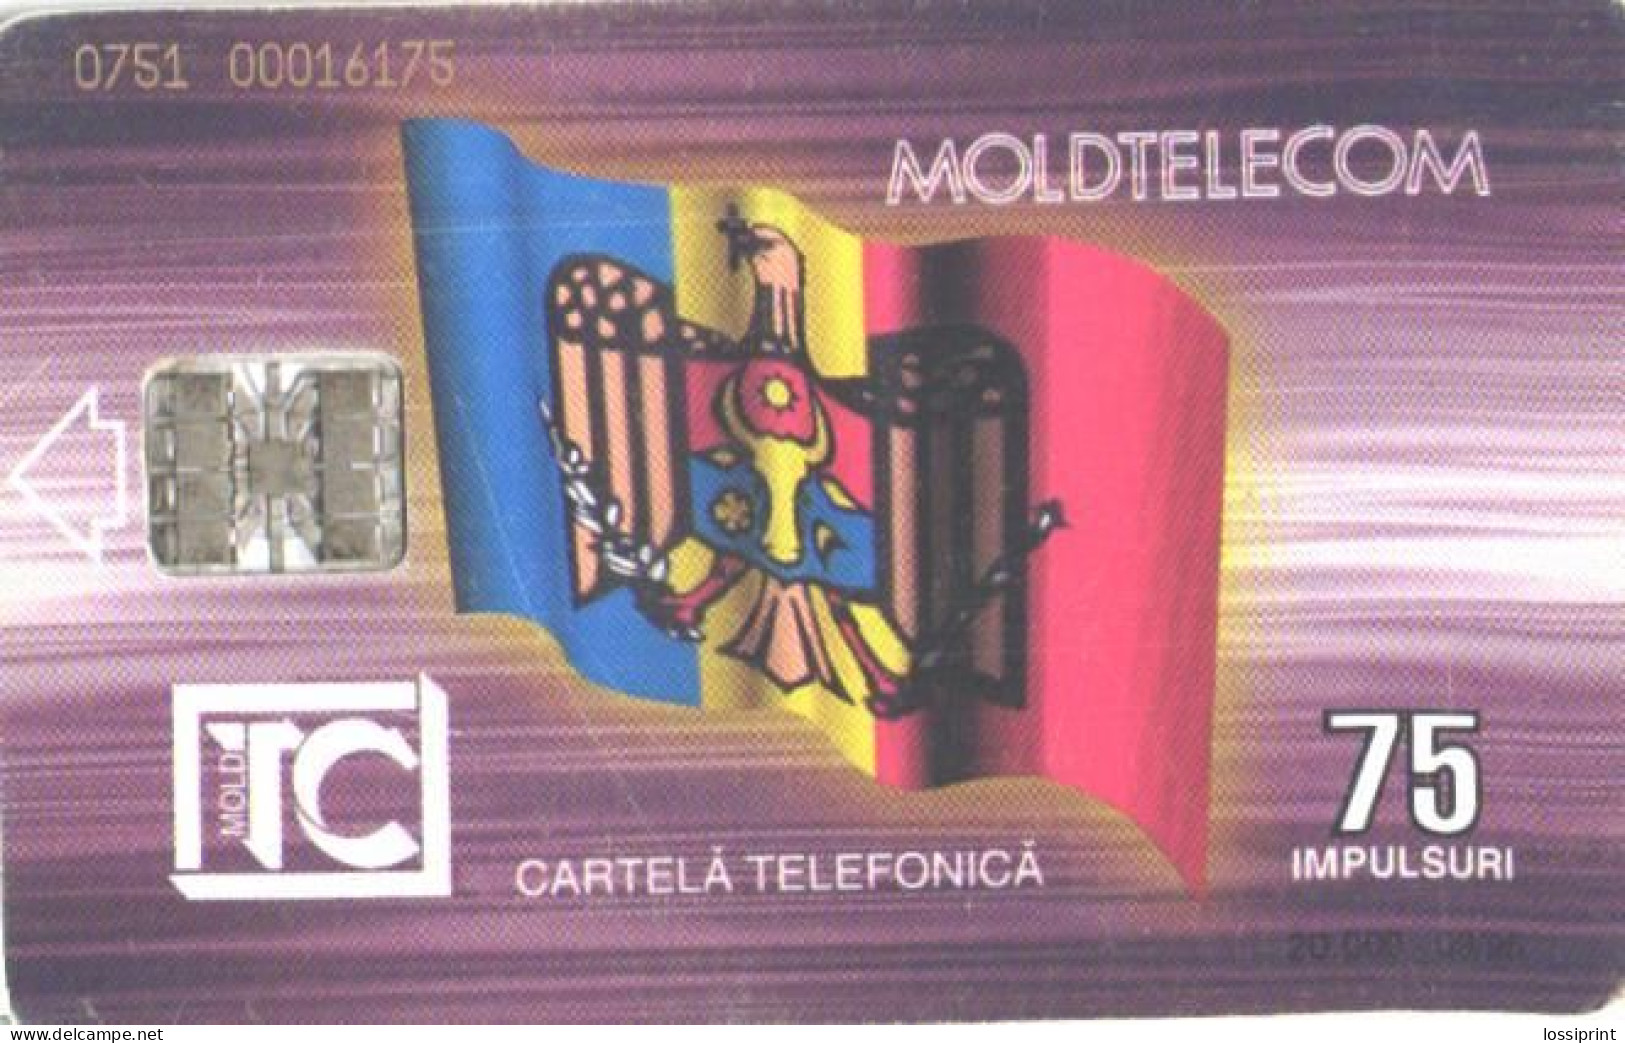 Moldova:Used Phonecard, Moldtelecom, 75 Impulses, Building, 1995 - Moldavia